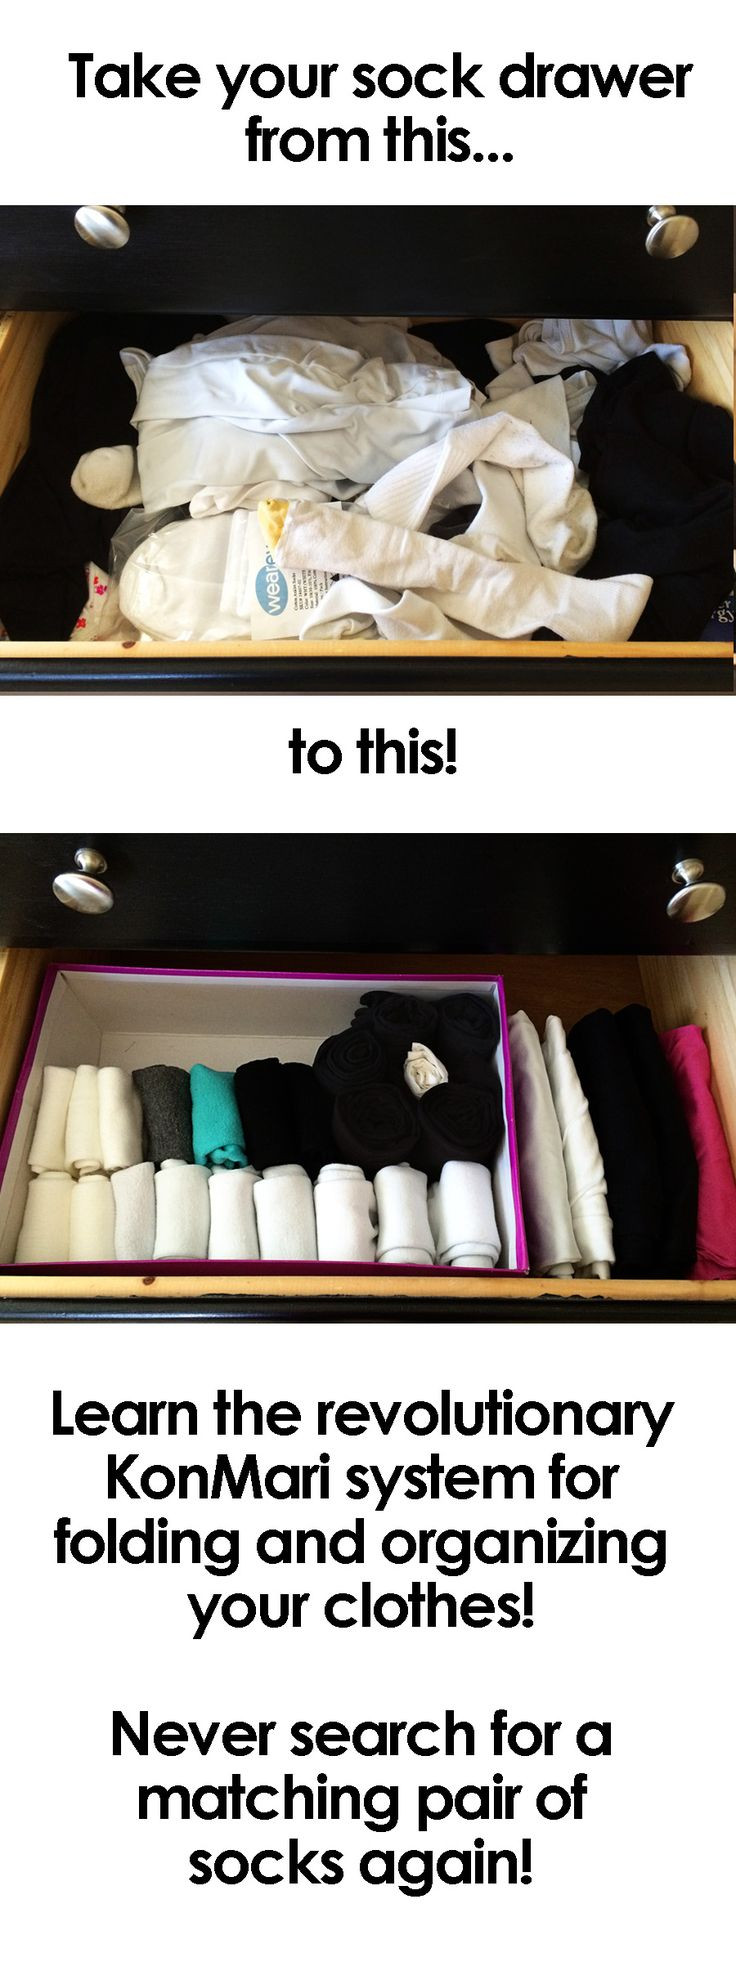 DIY Sock Drawer Organizer
 Best 25 Sock drawer organizing ideas on Pinterest